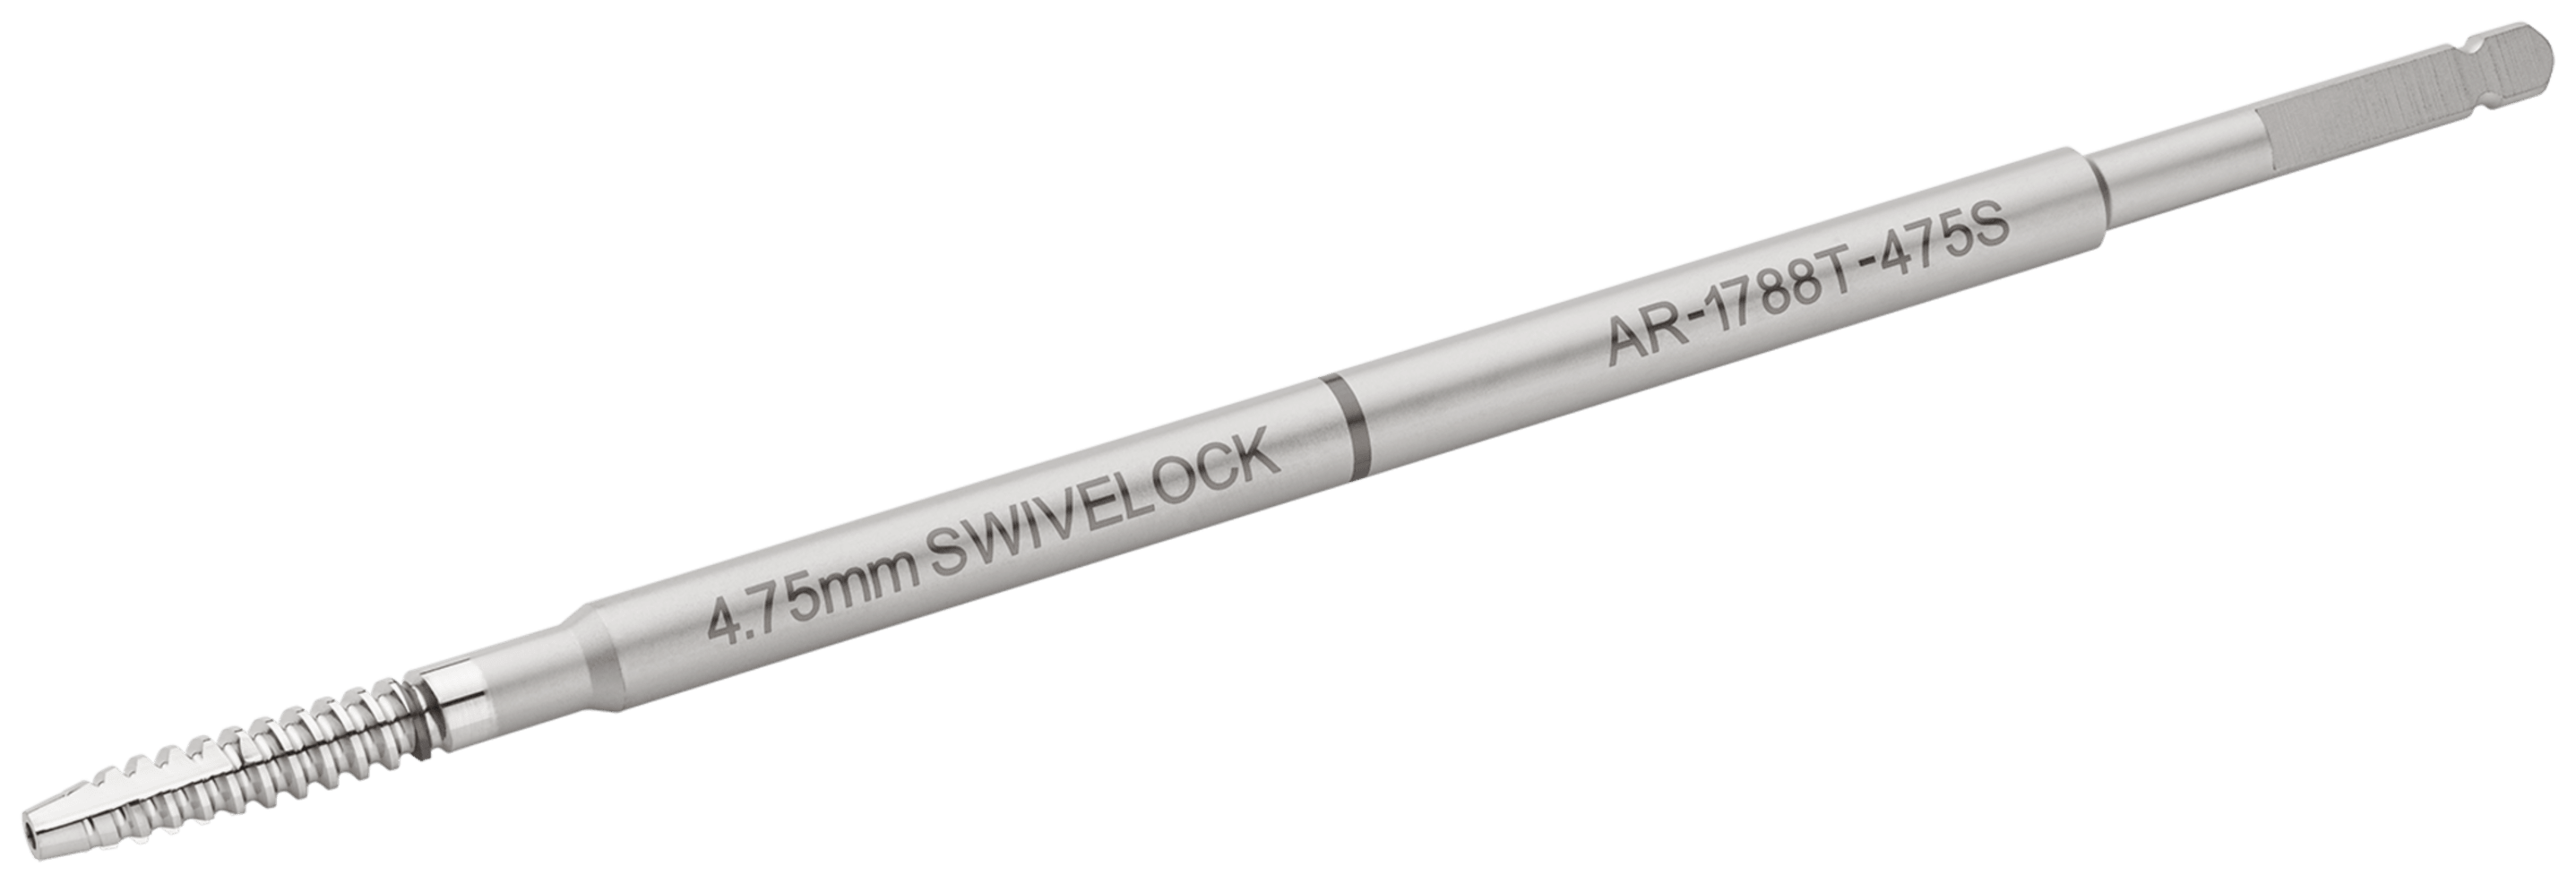 SwiveLock Bone Tap, 4.75 mm, Cannulated, AO